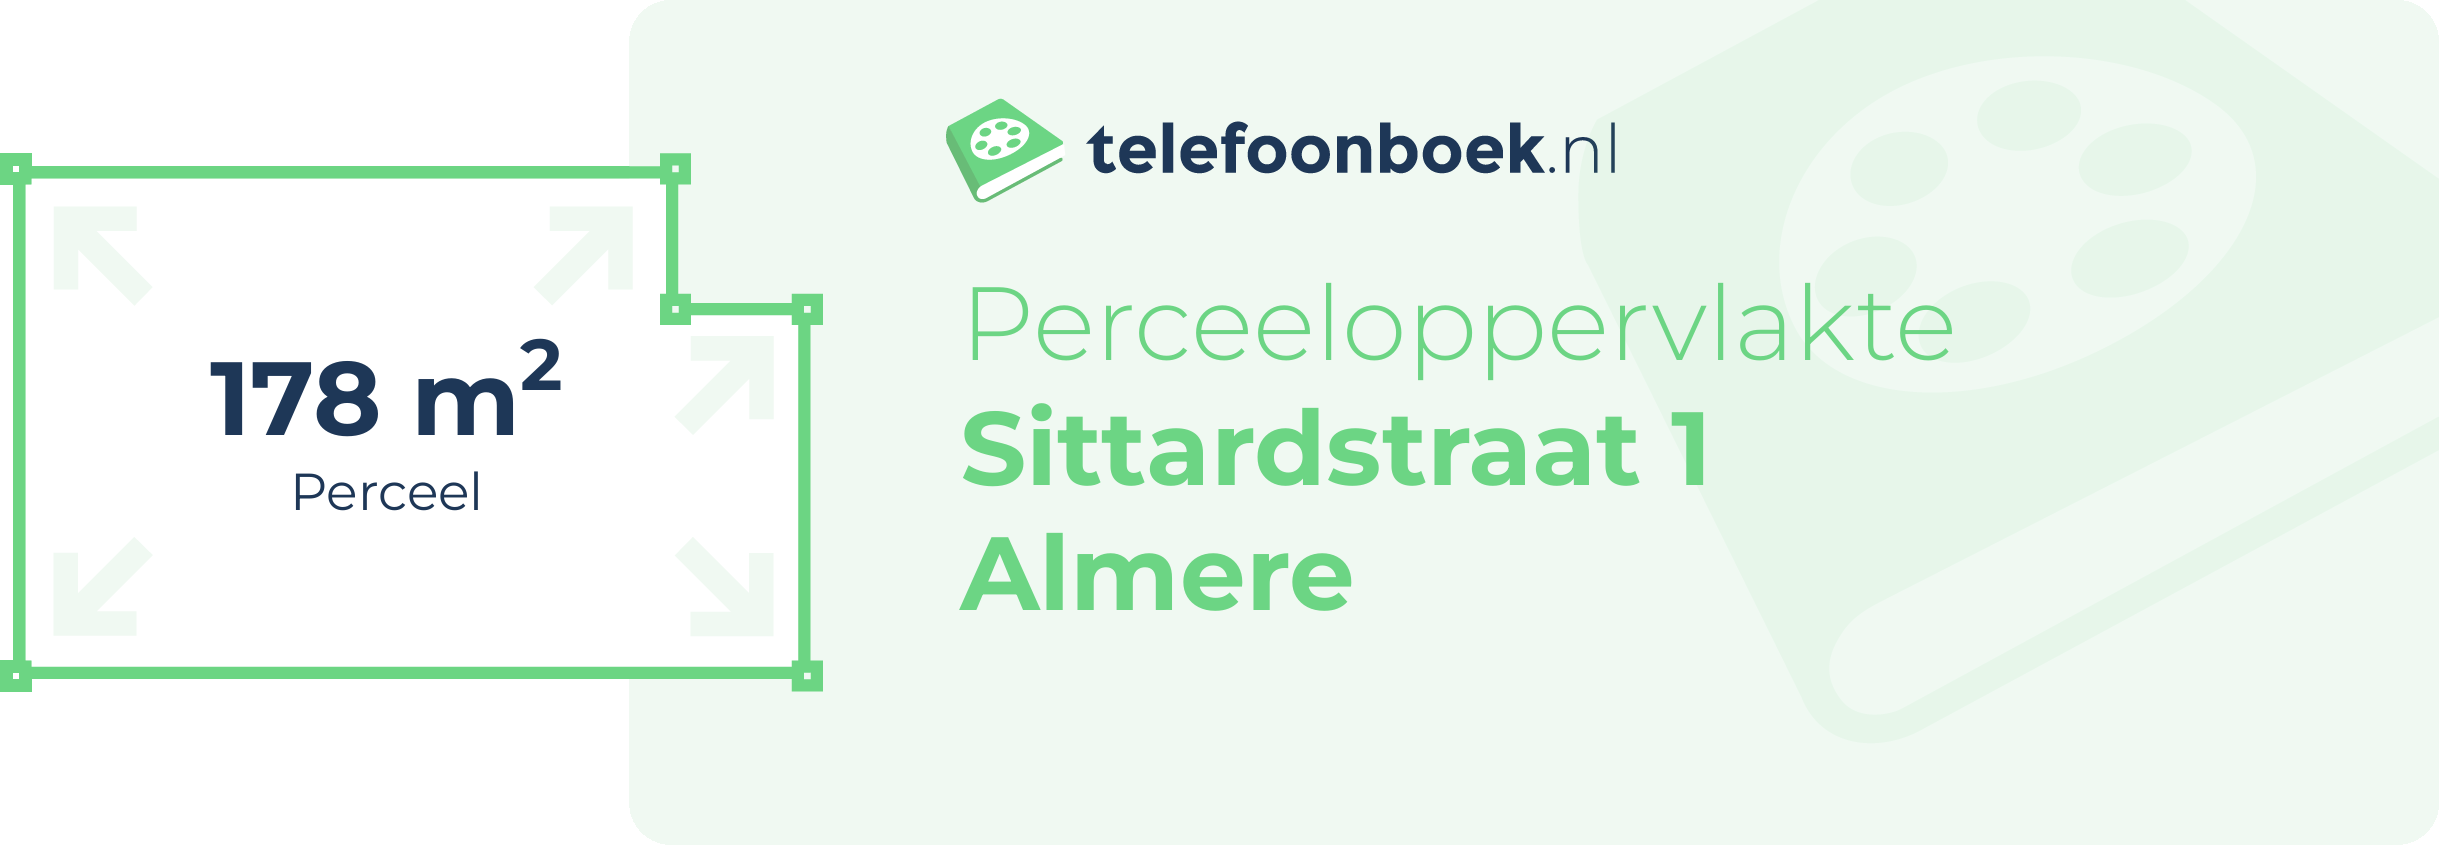 Perceeloppervlakte Sittardstraat 1 Almere